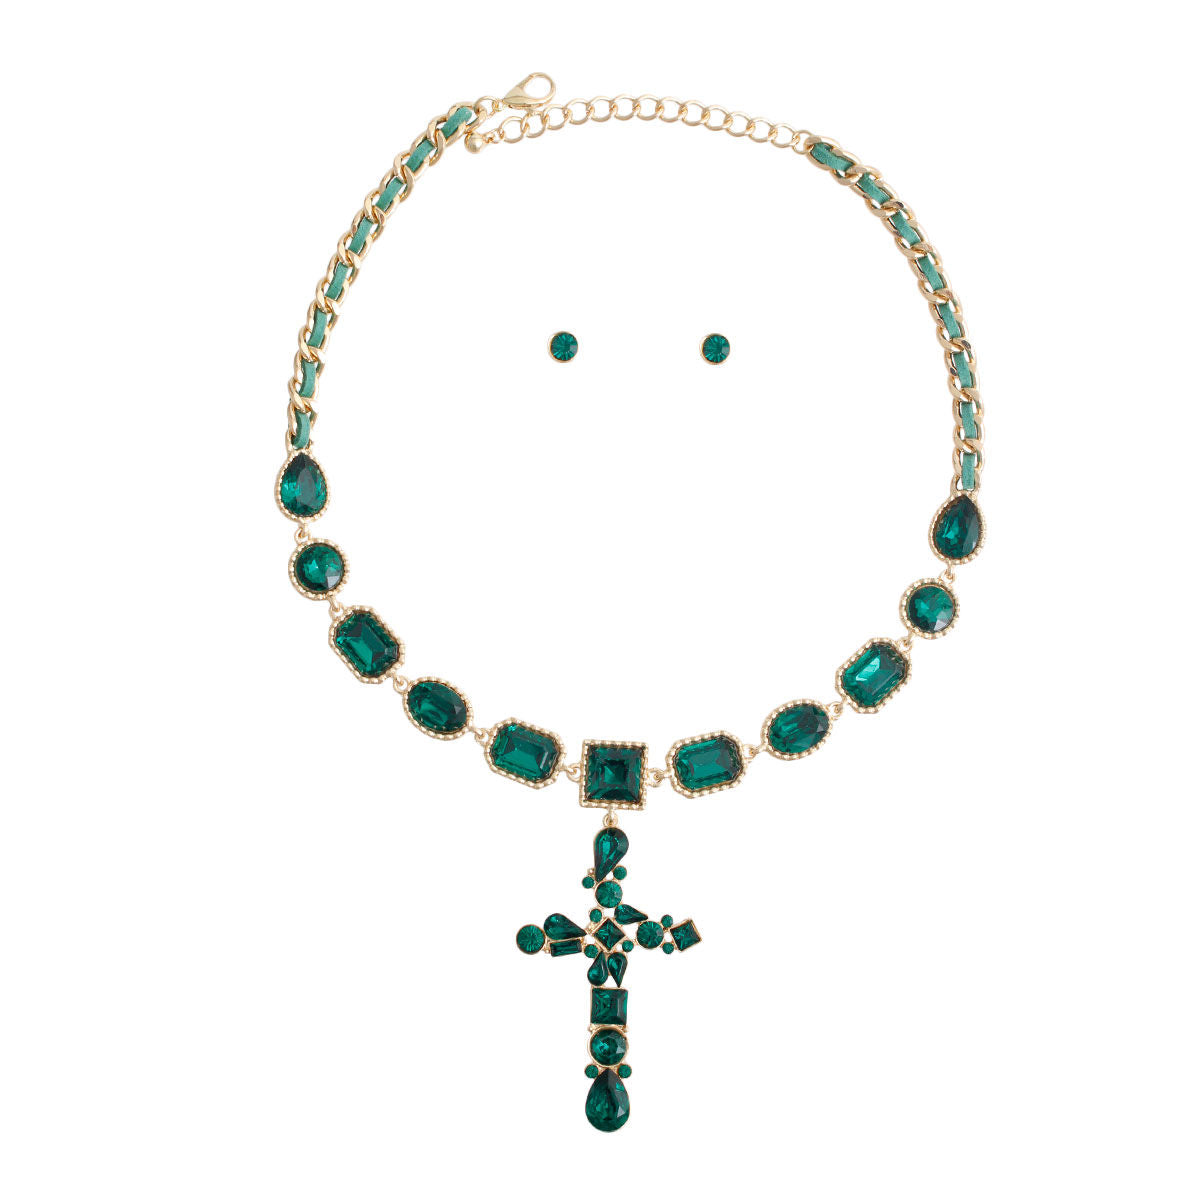 Celeb Green Cross Necklace